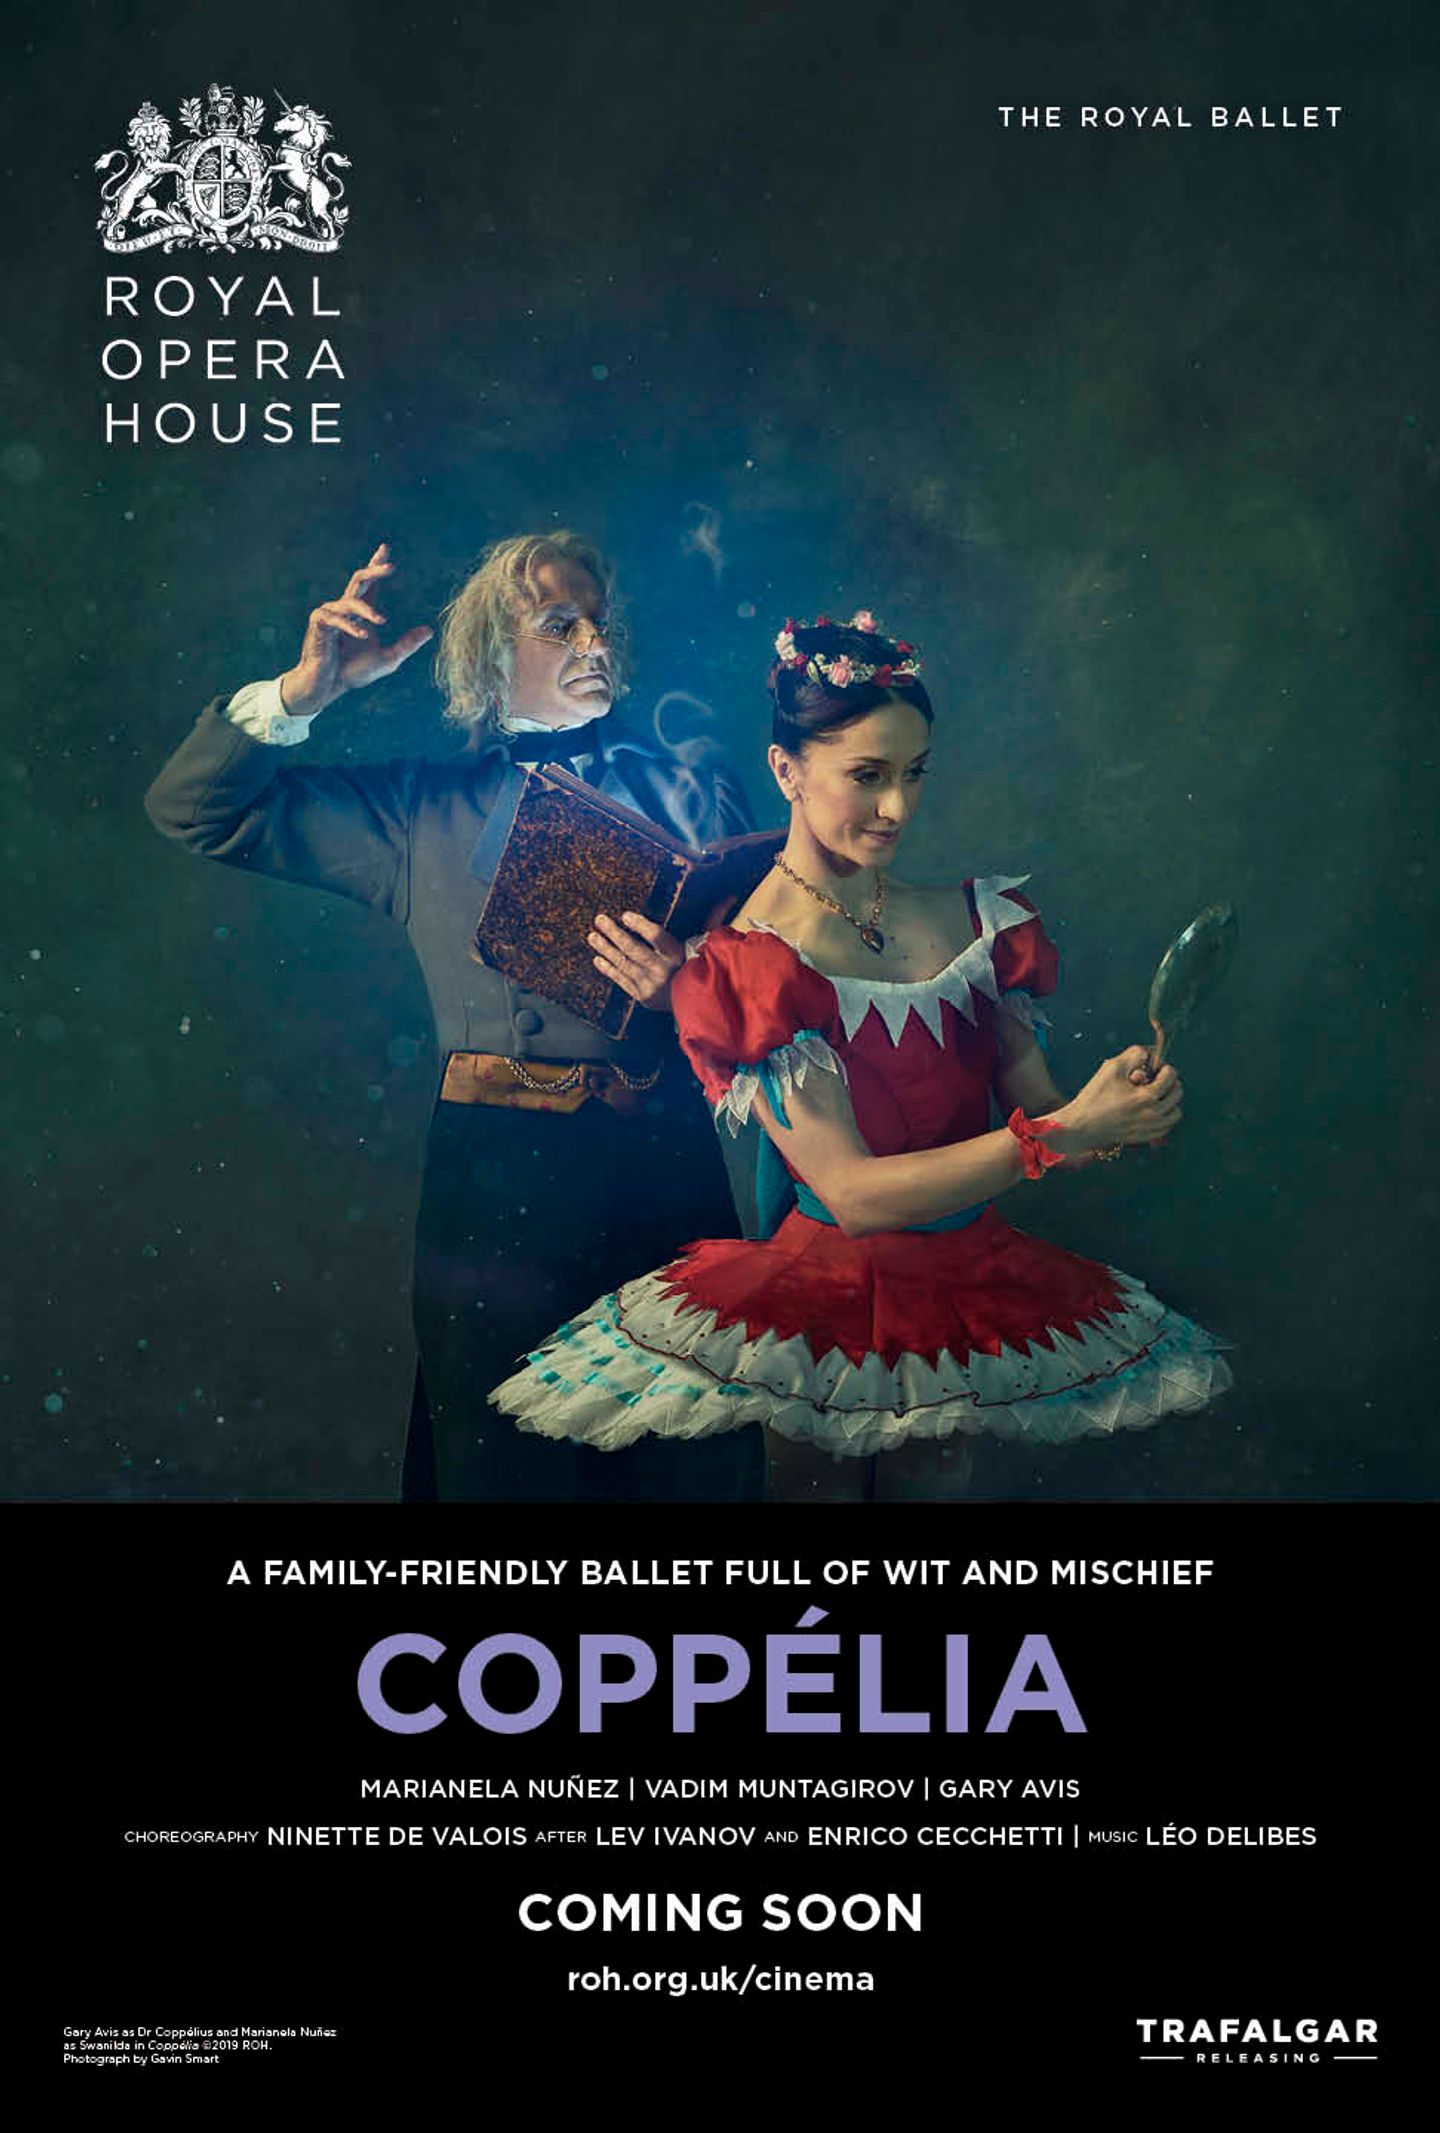 Plakat for 'Coppélia - Royal Opera House 19/20'